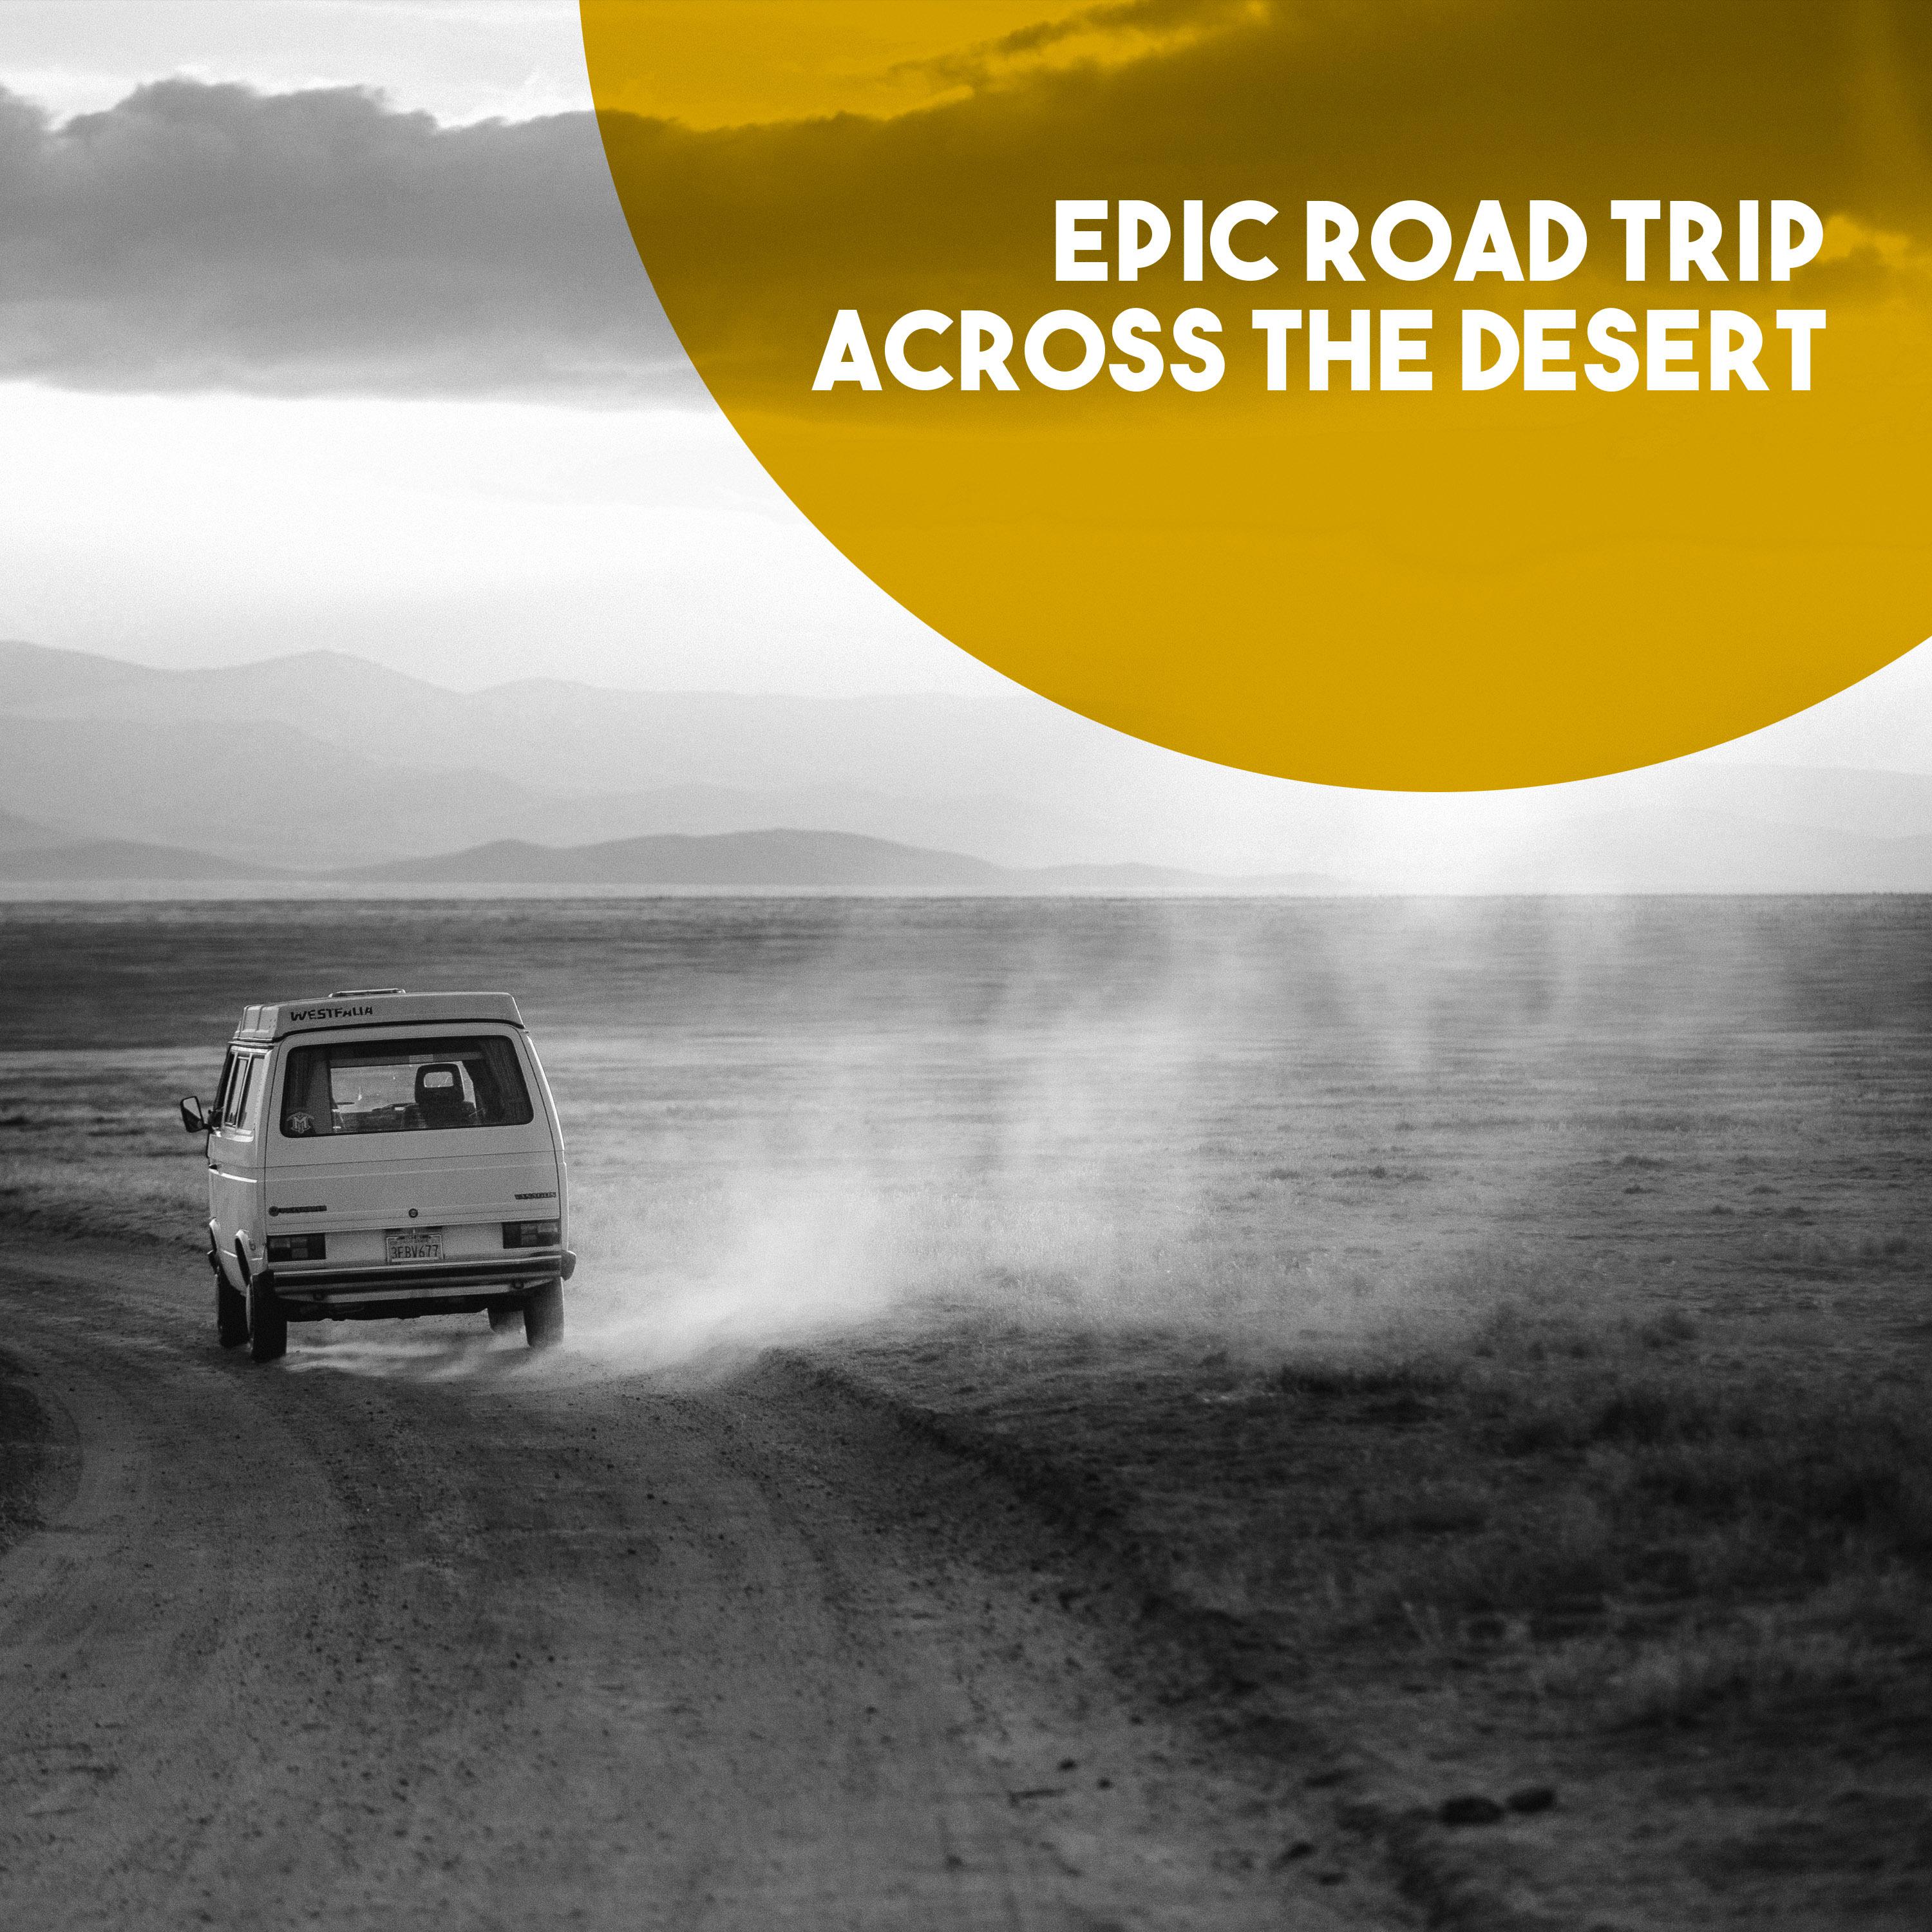 Epic Road Trip across the Desert